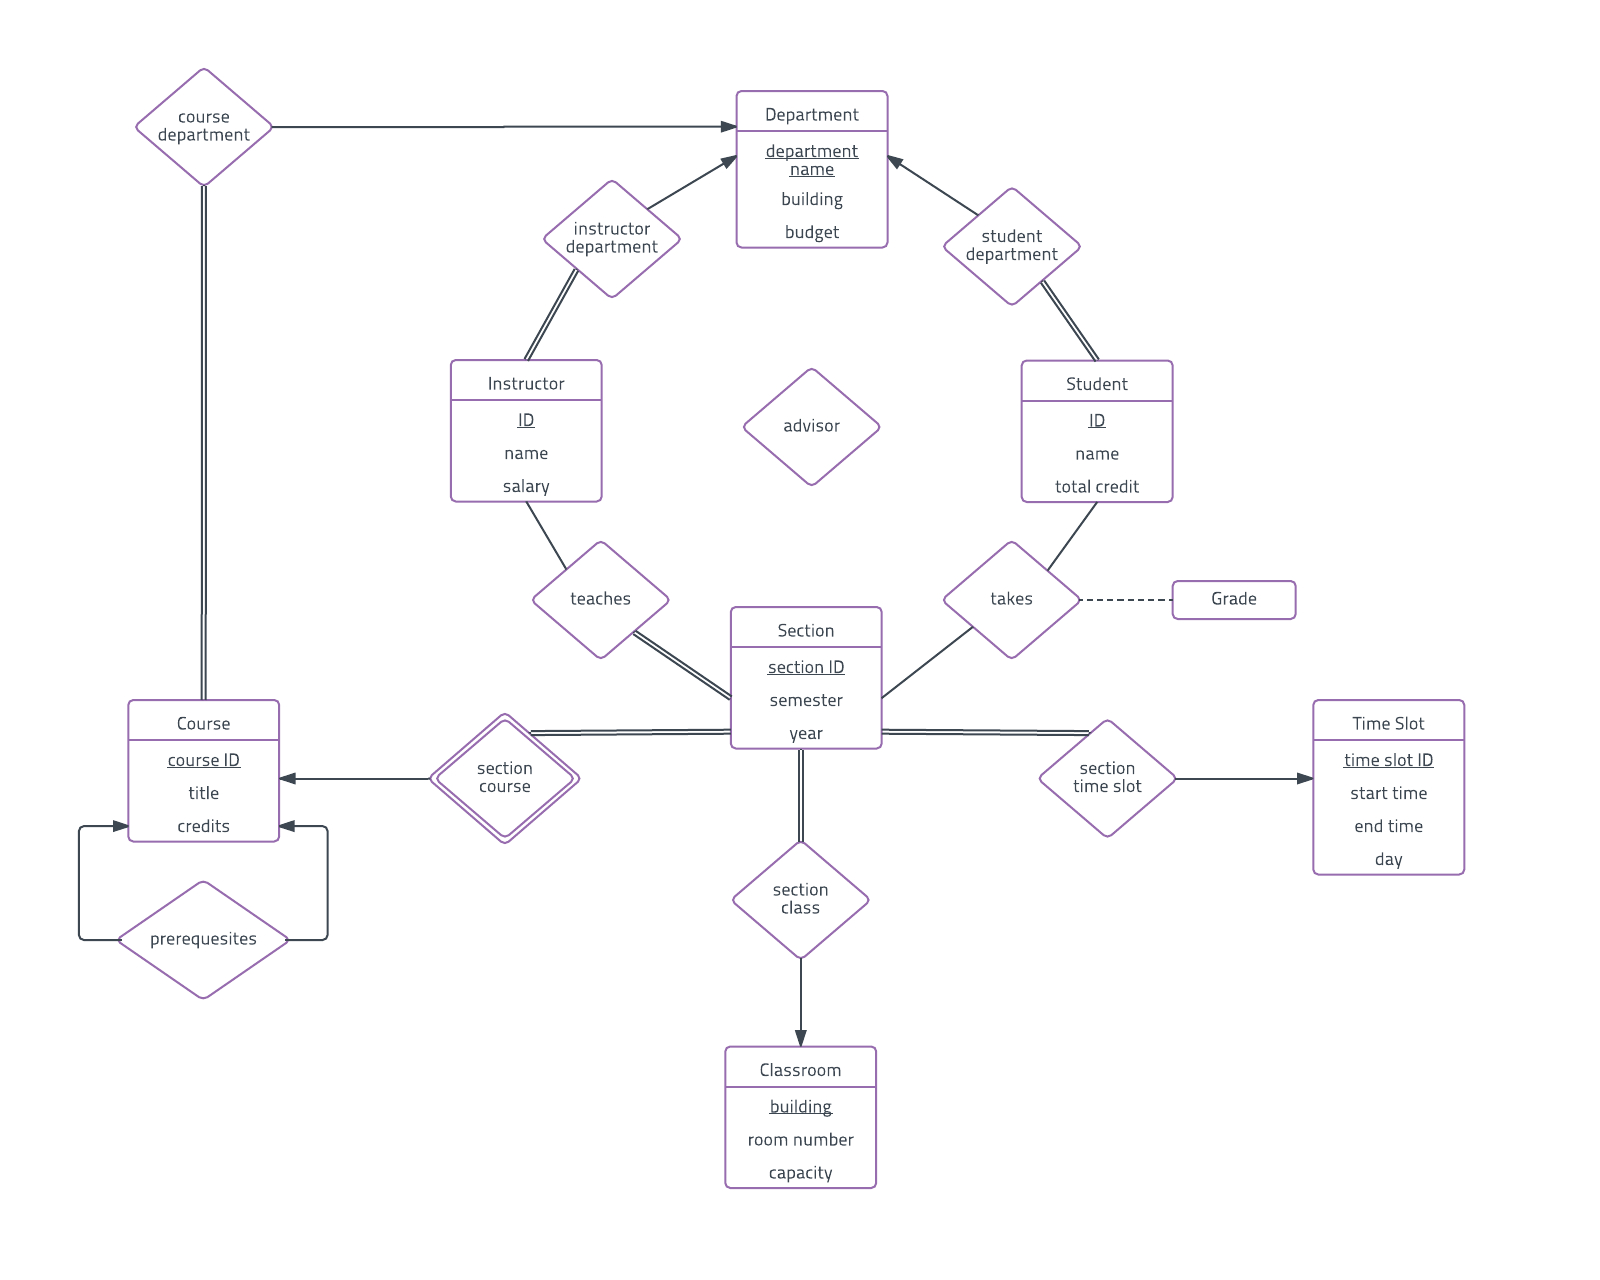 Er Diagram Examples And Templates | Lucidchart regarding Entity Relationship Model Diagram